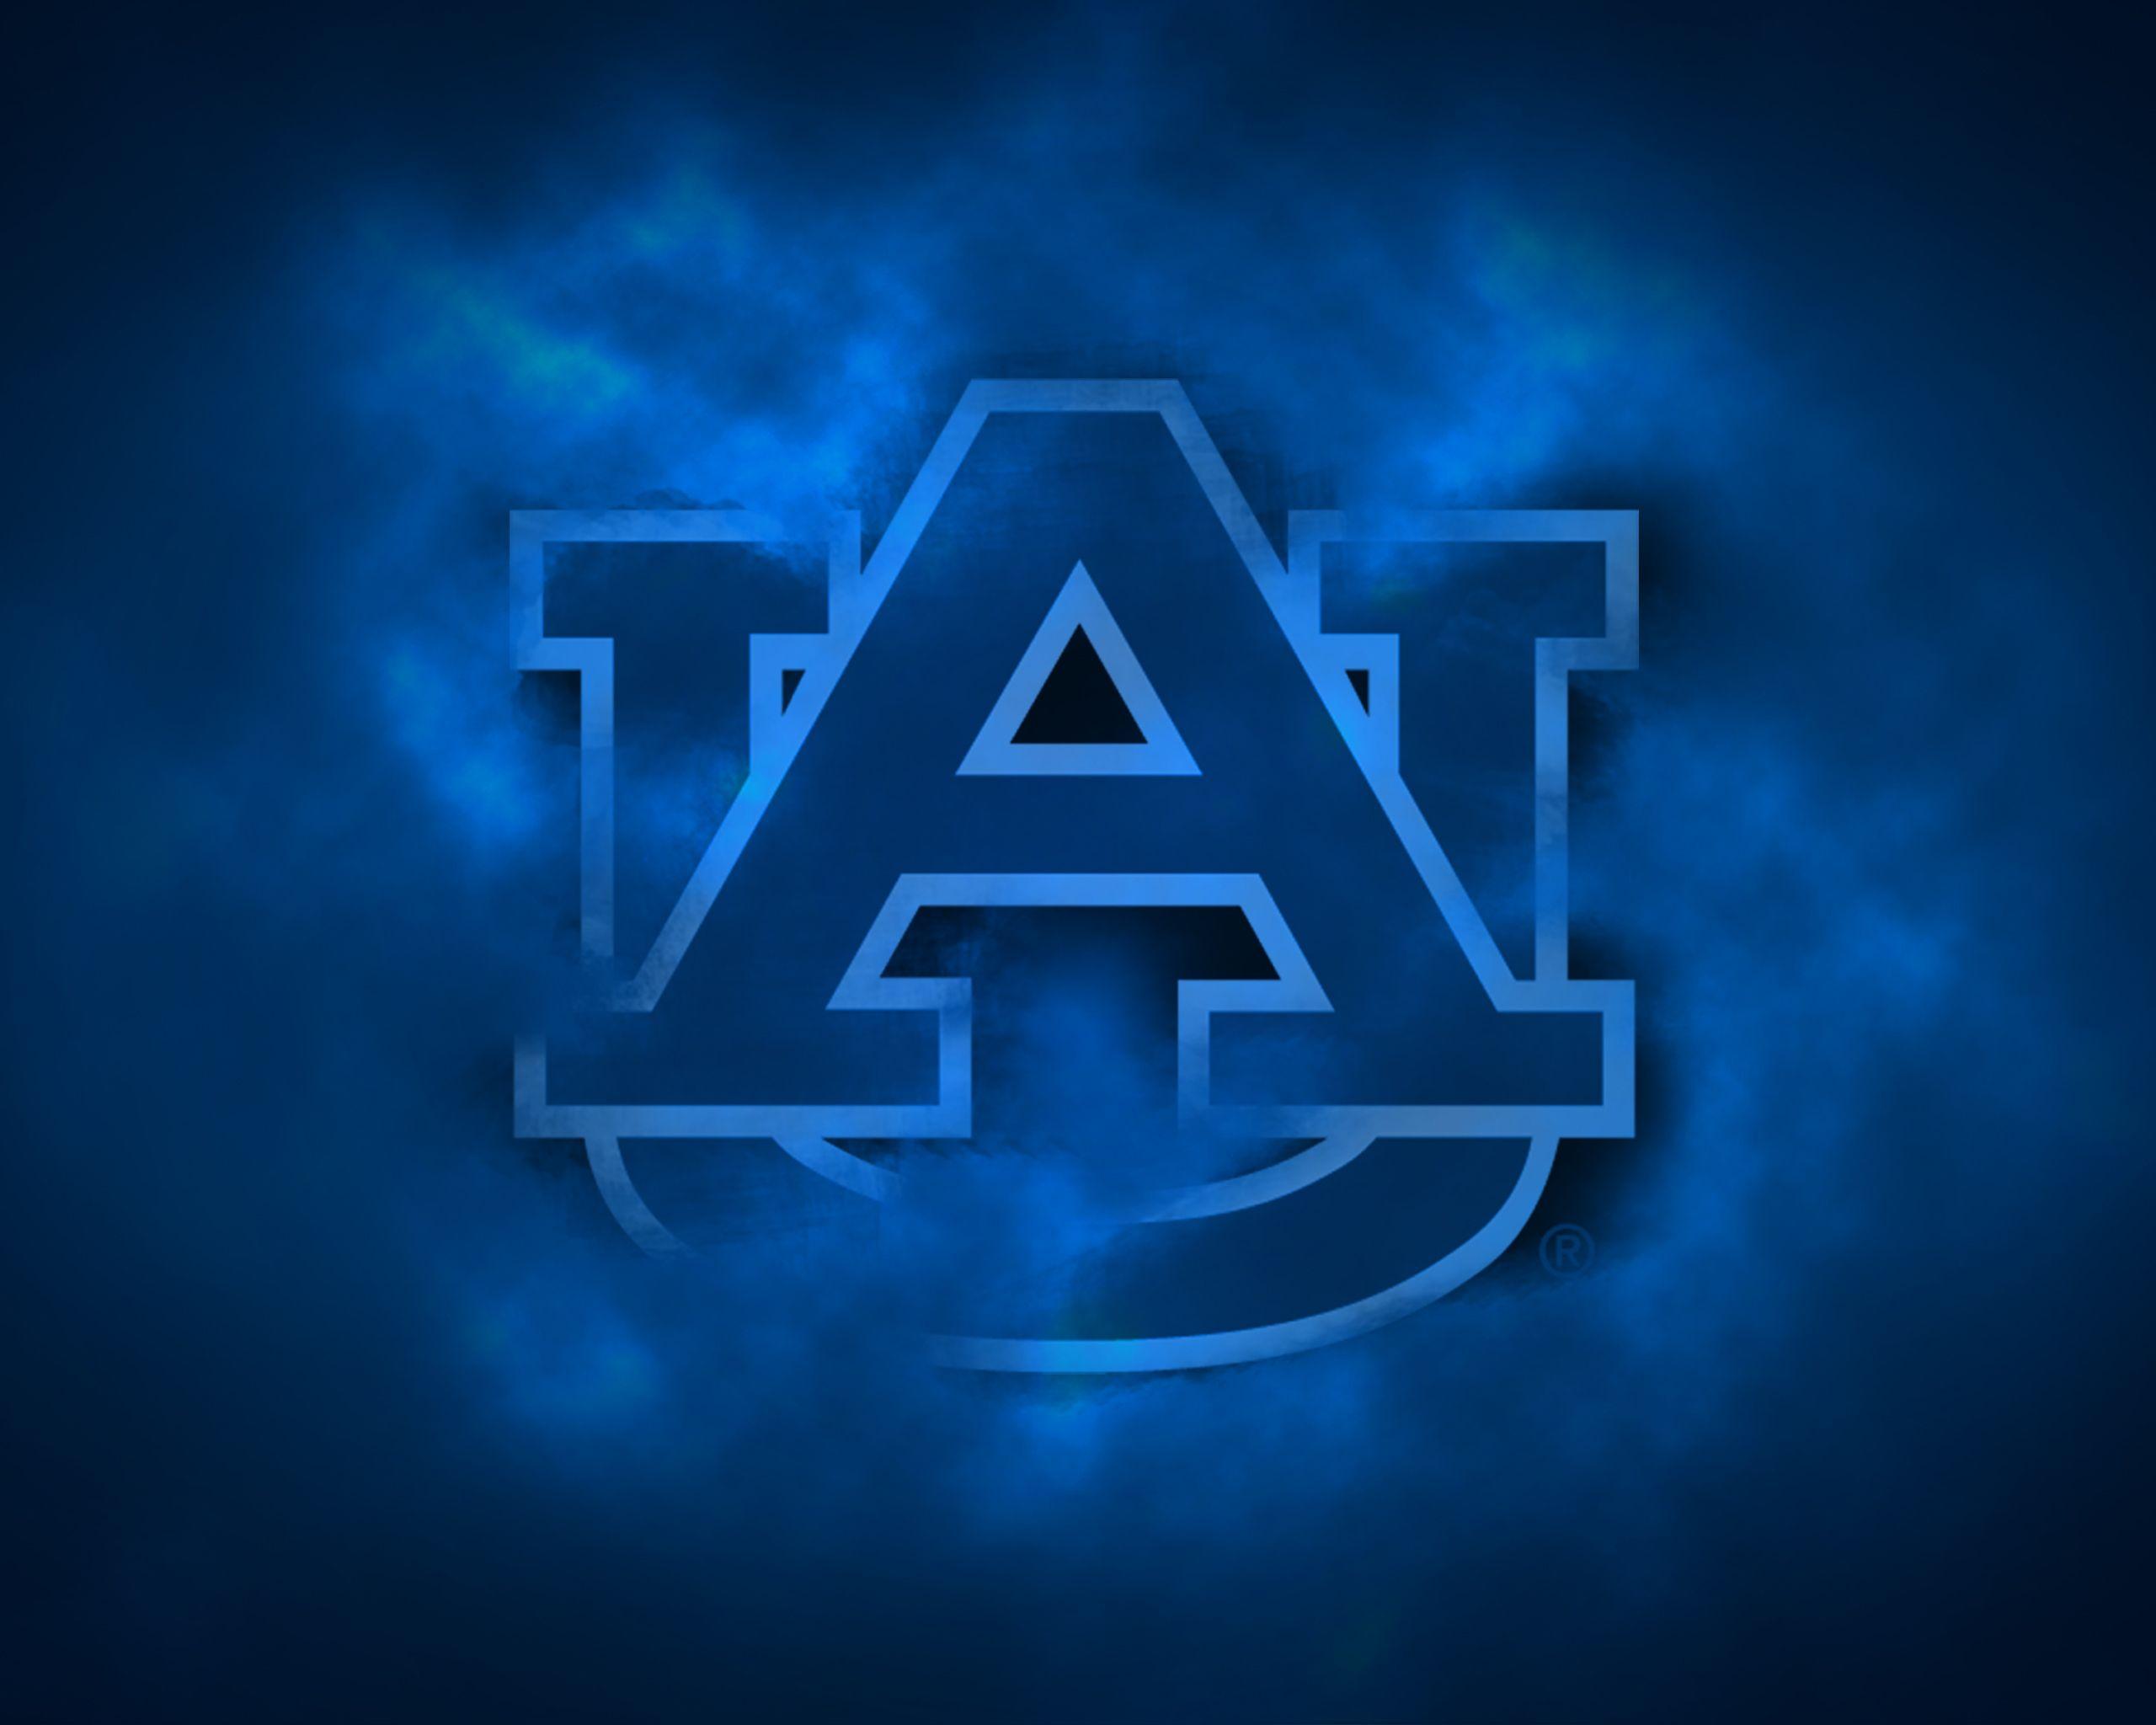 AUBURNTIGERS.COM - Auburn University Official Athletic Site